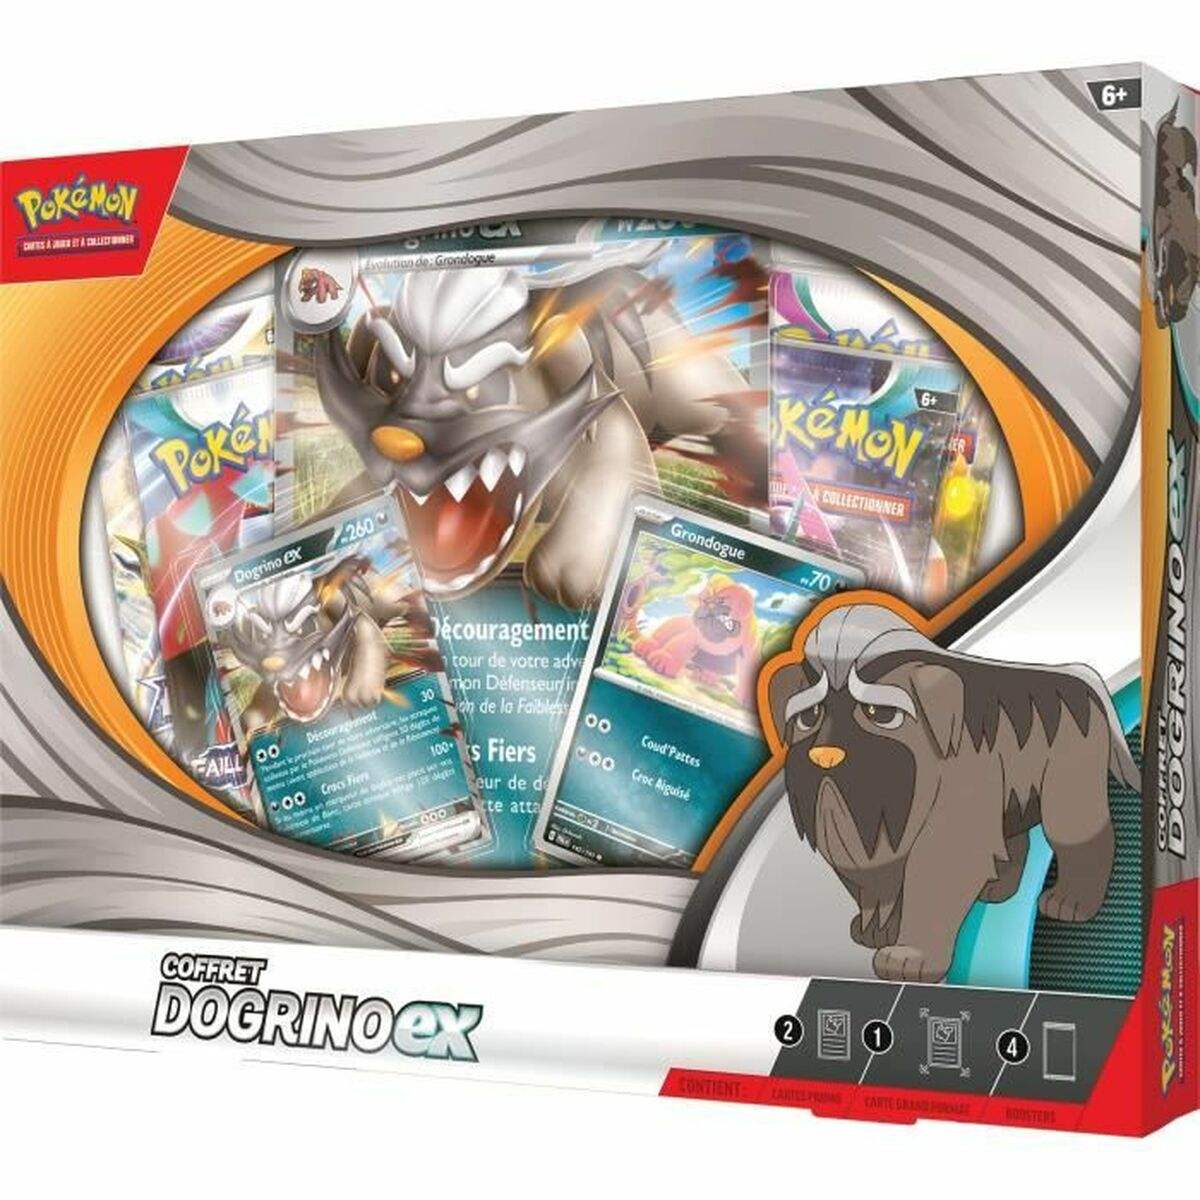 Aufkleber-Pack Pokémon Dogrino-ex Q1